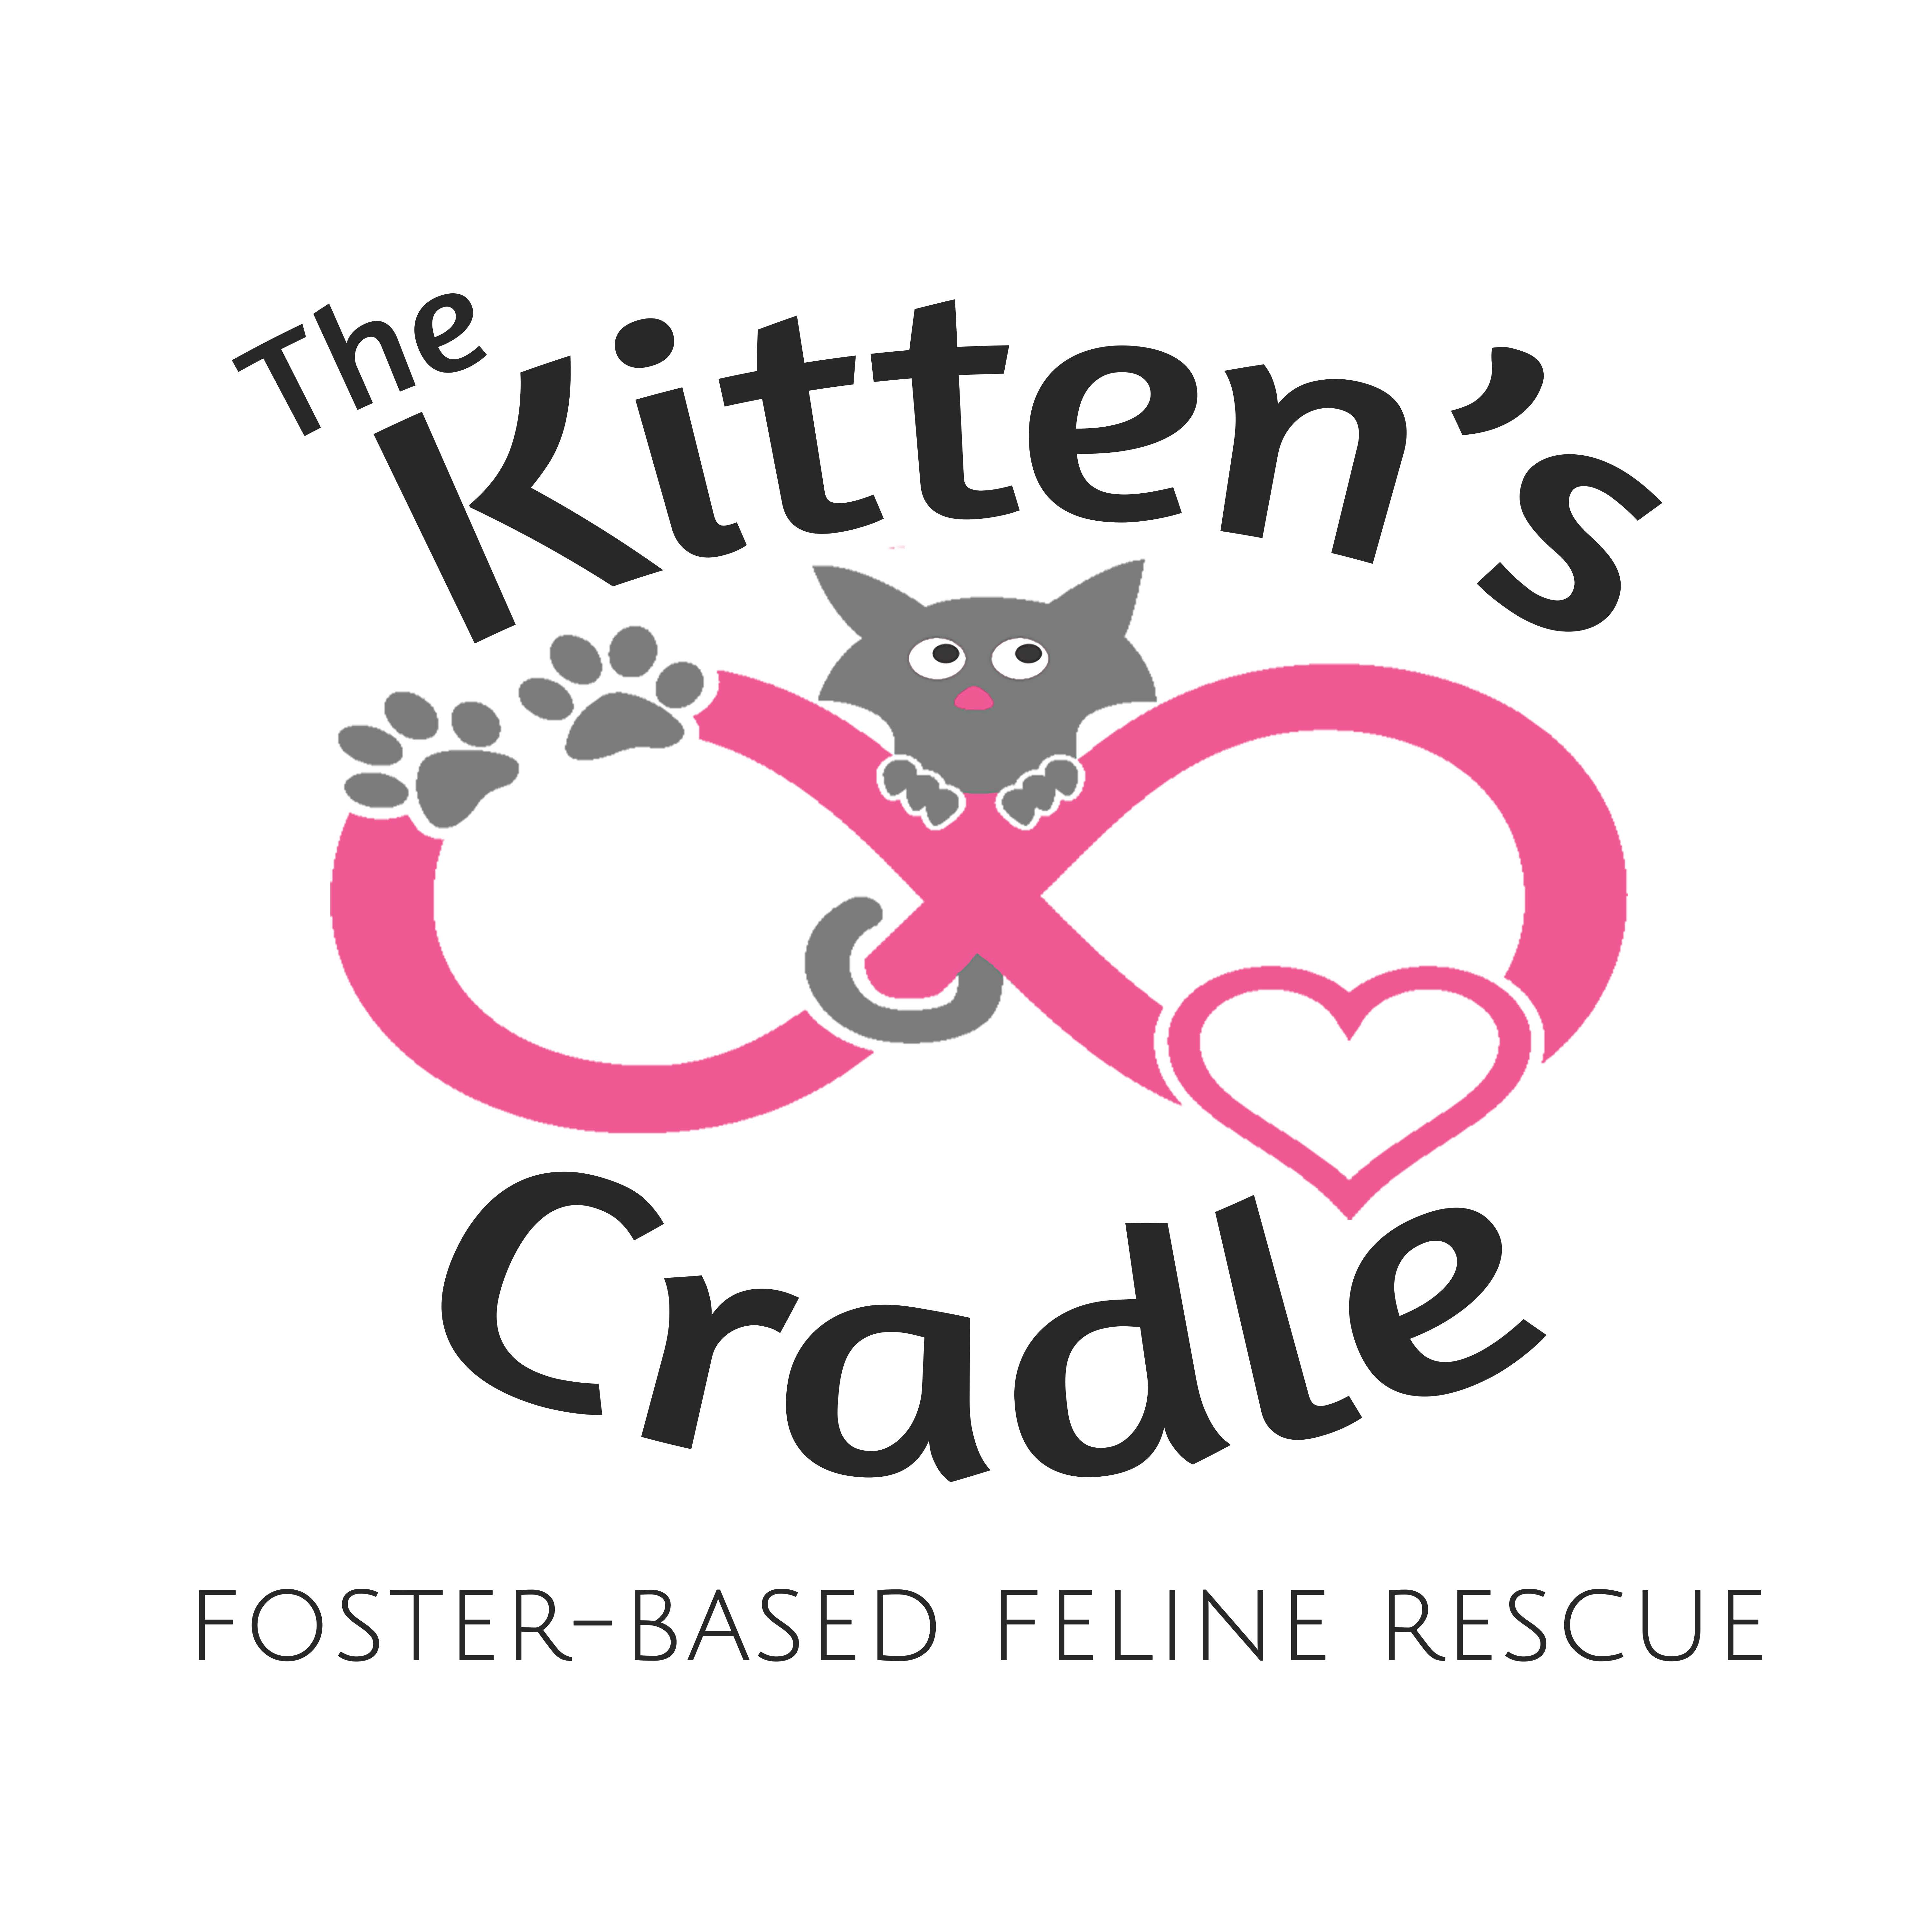 The Kittens Cradle, Ltd